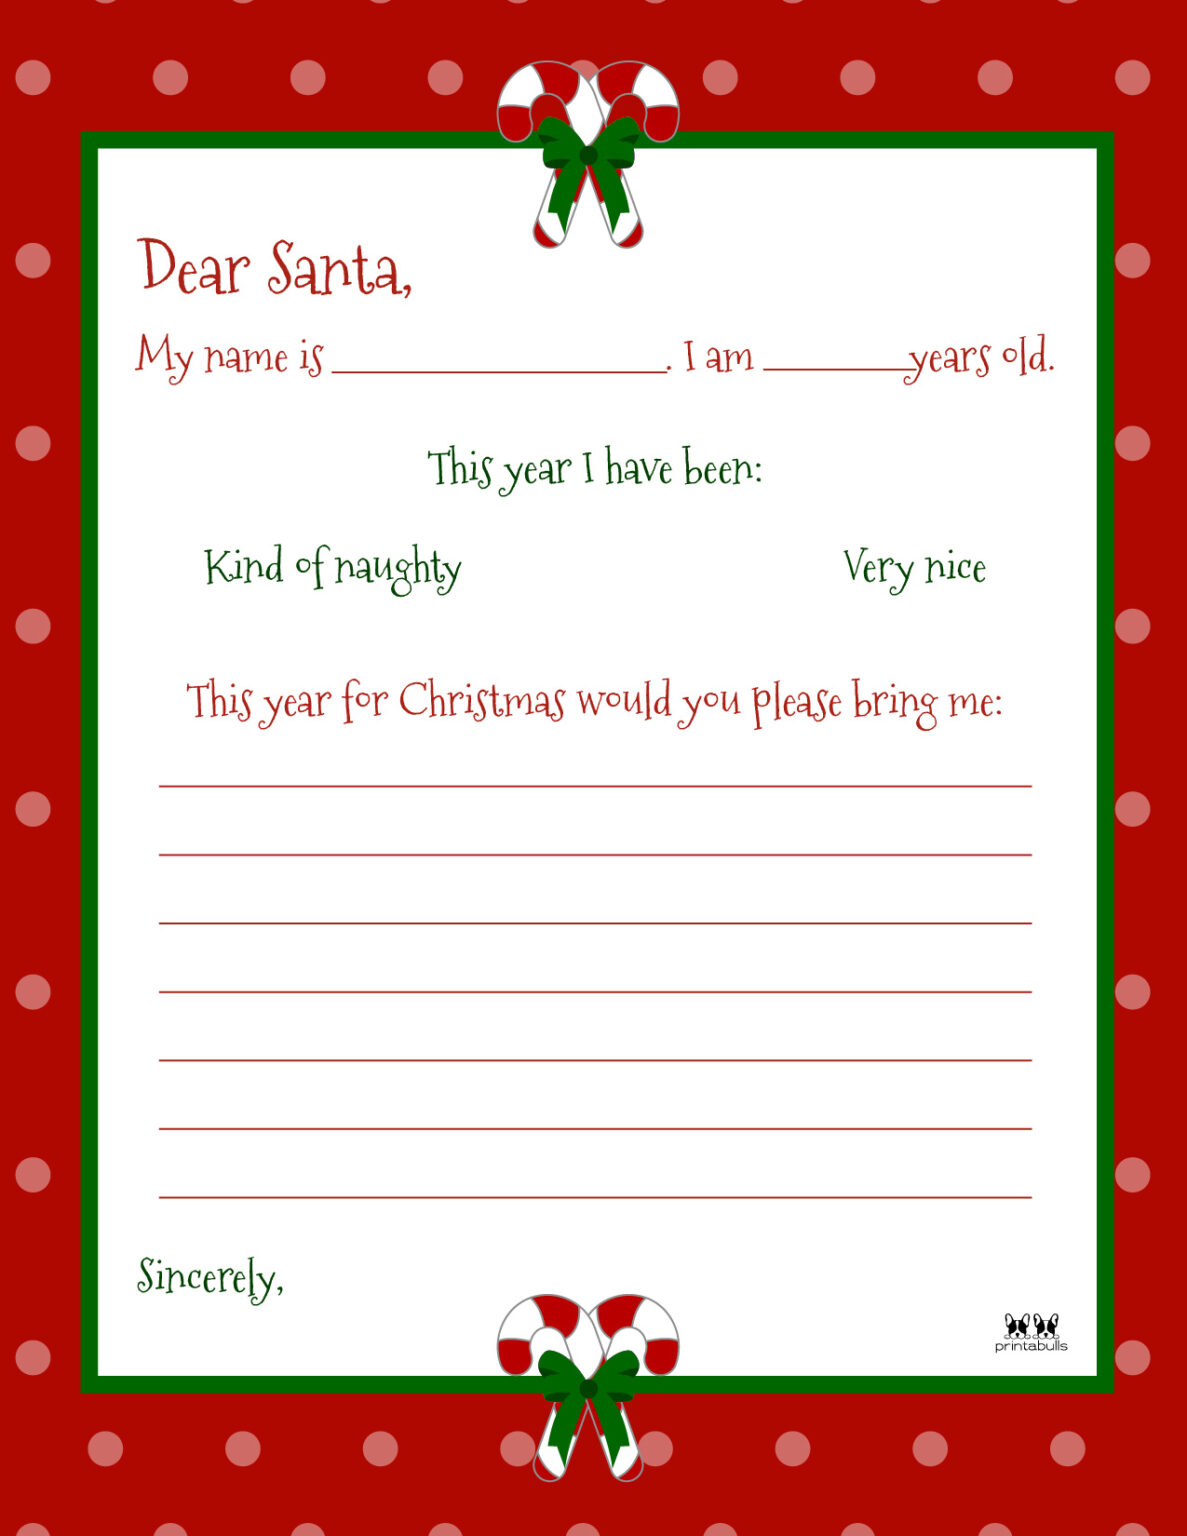 dear santa letter printable free